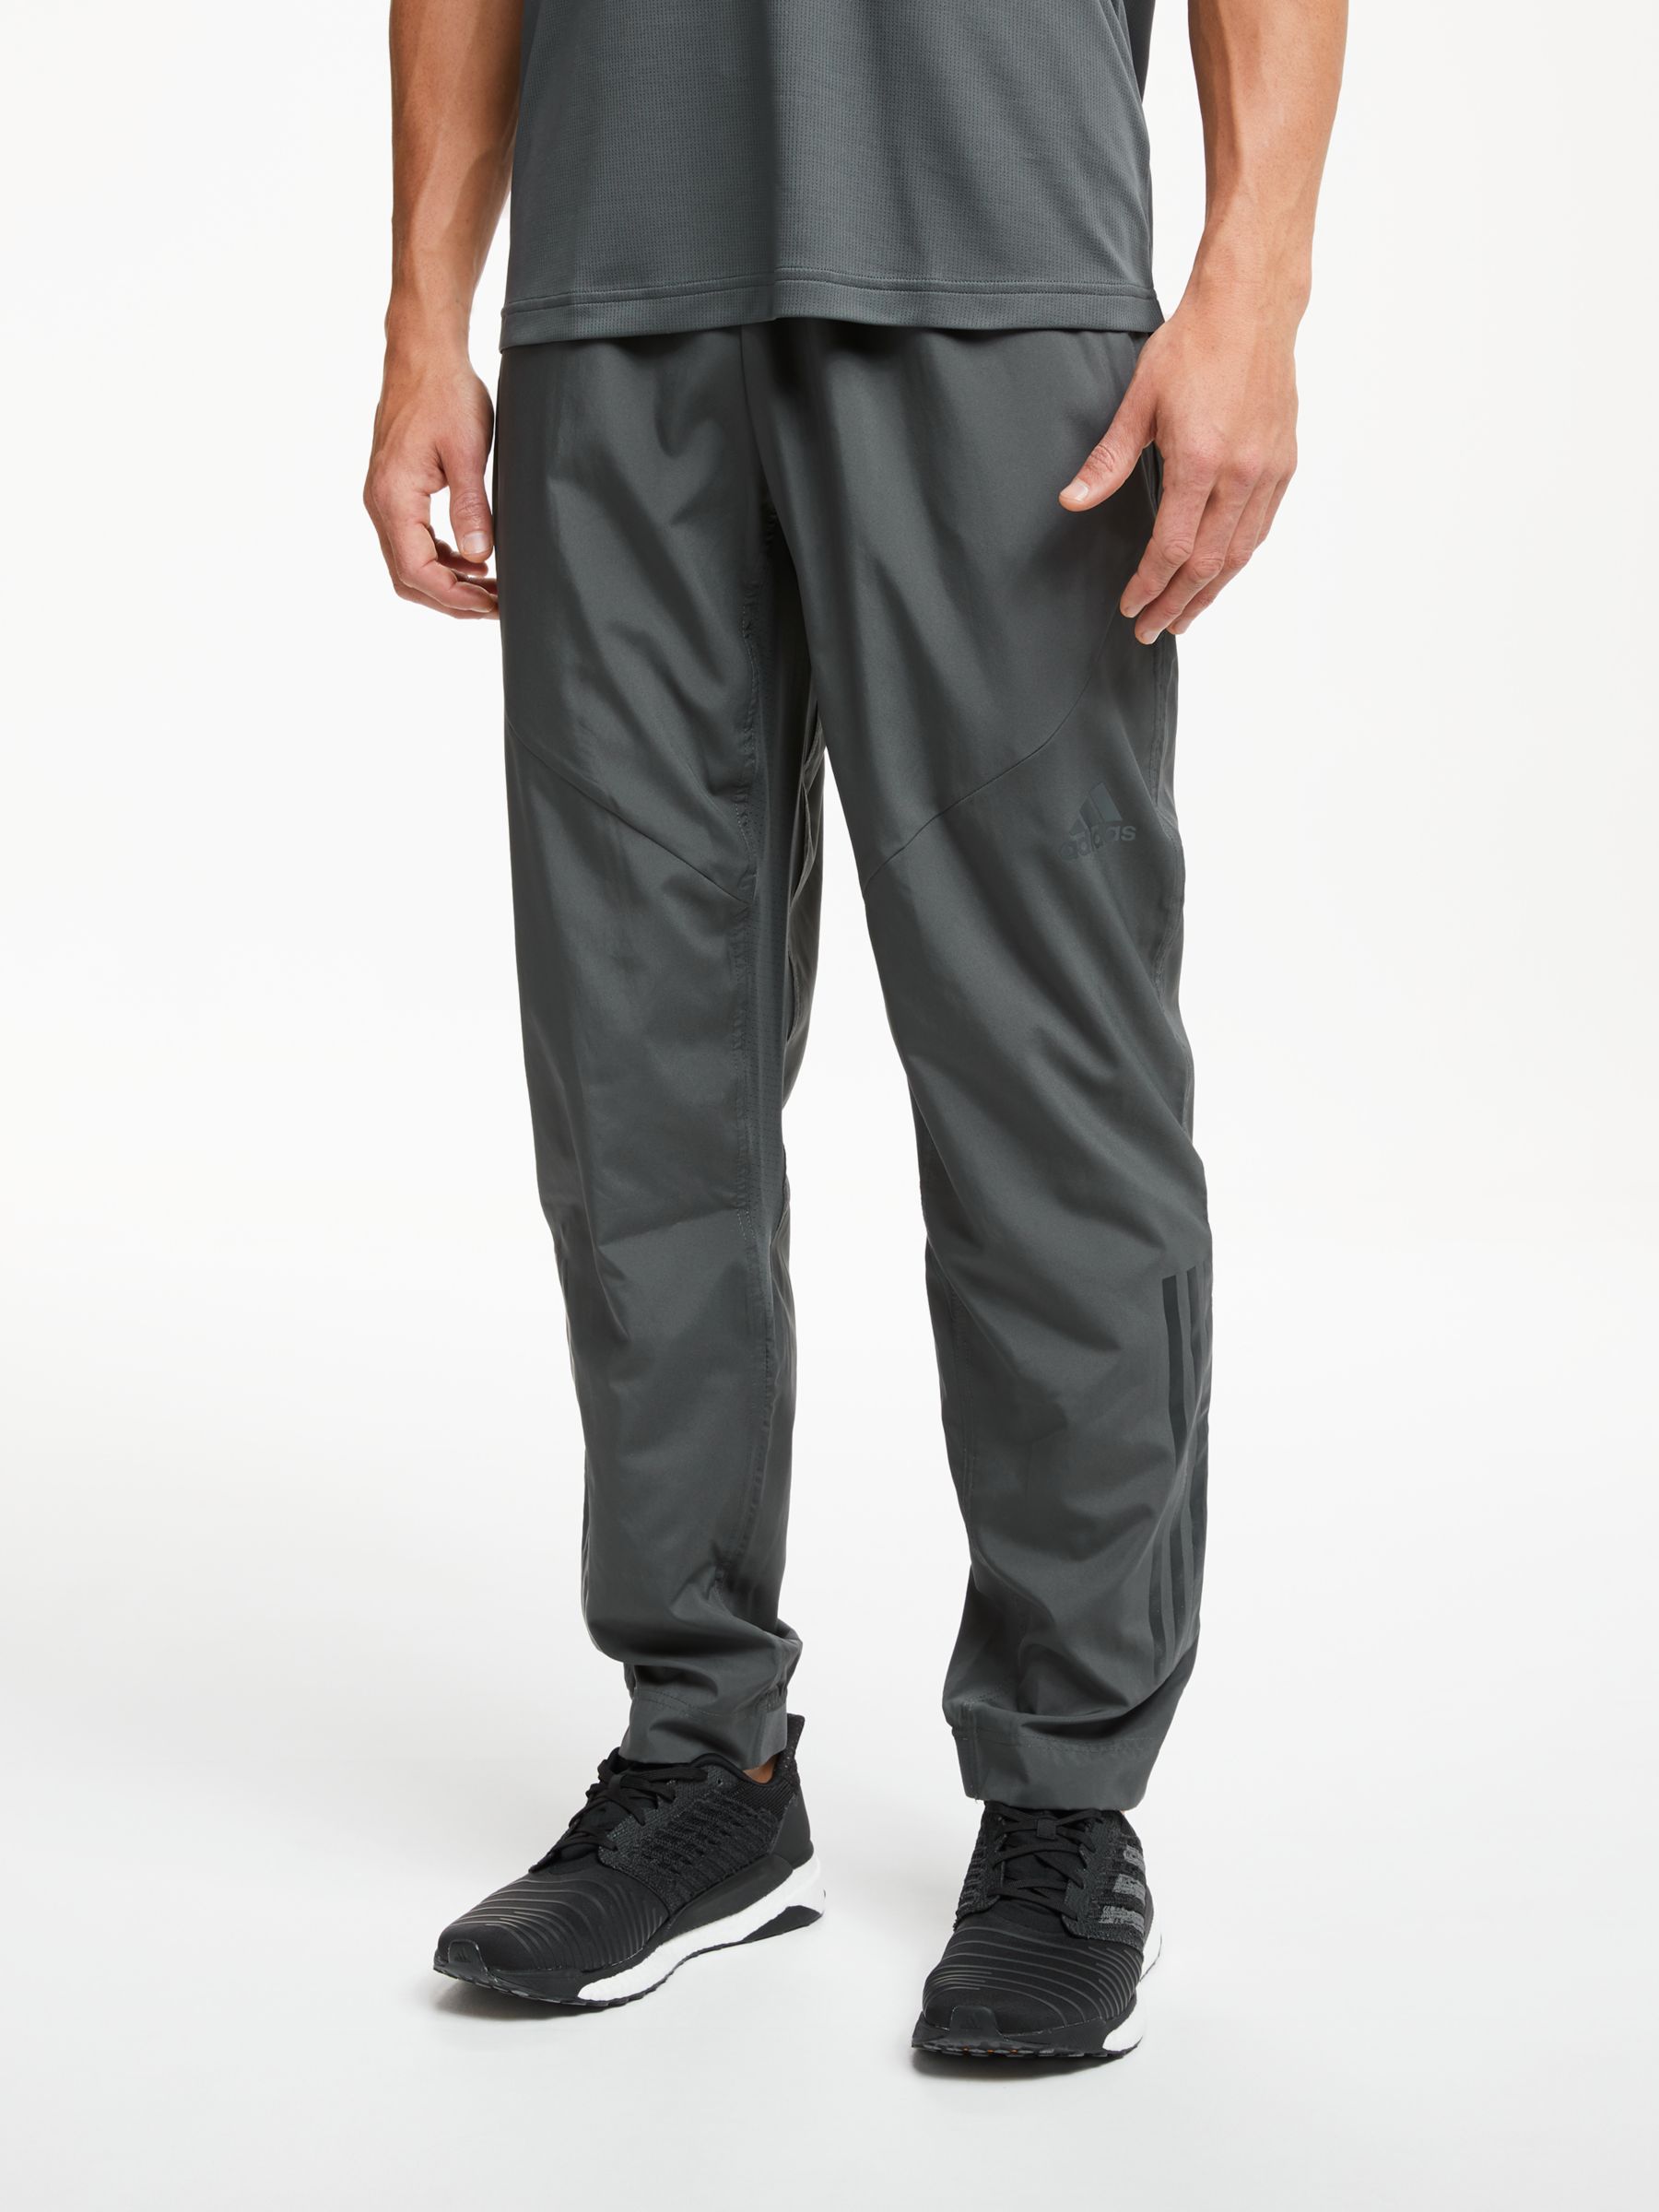 Adidas climacool workout pants size A/M, Men's Fashion, Activewear